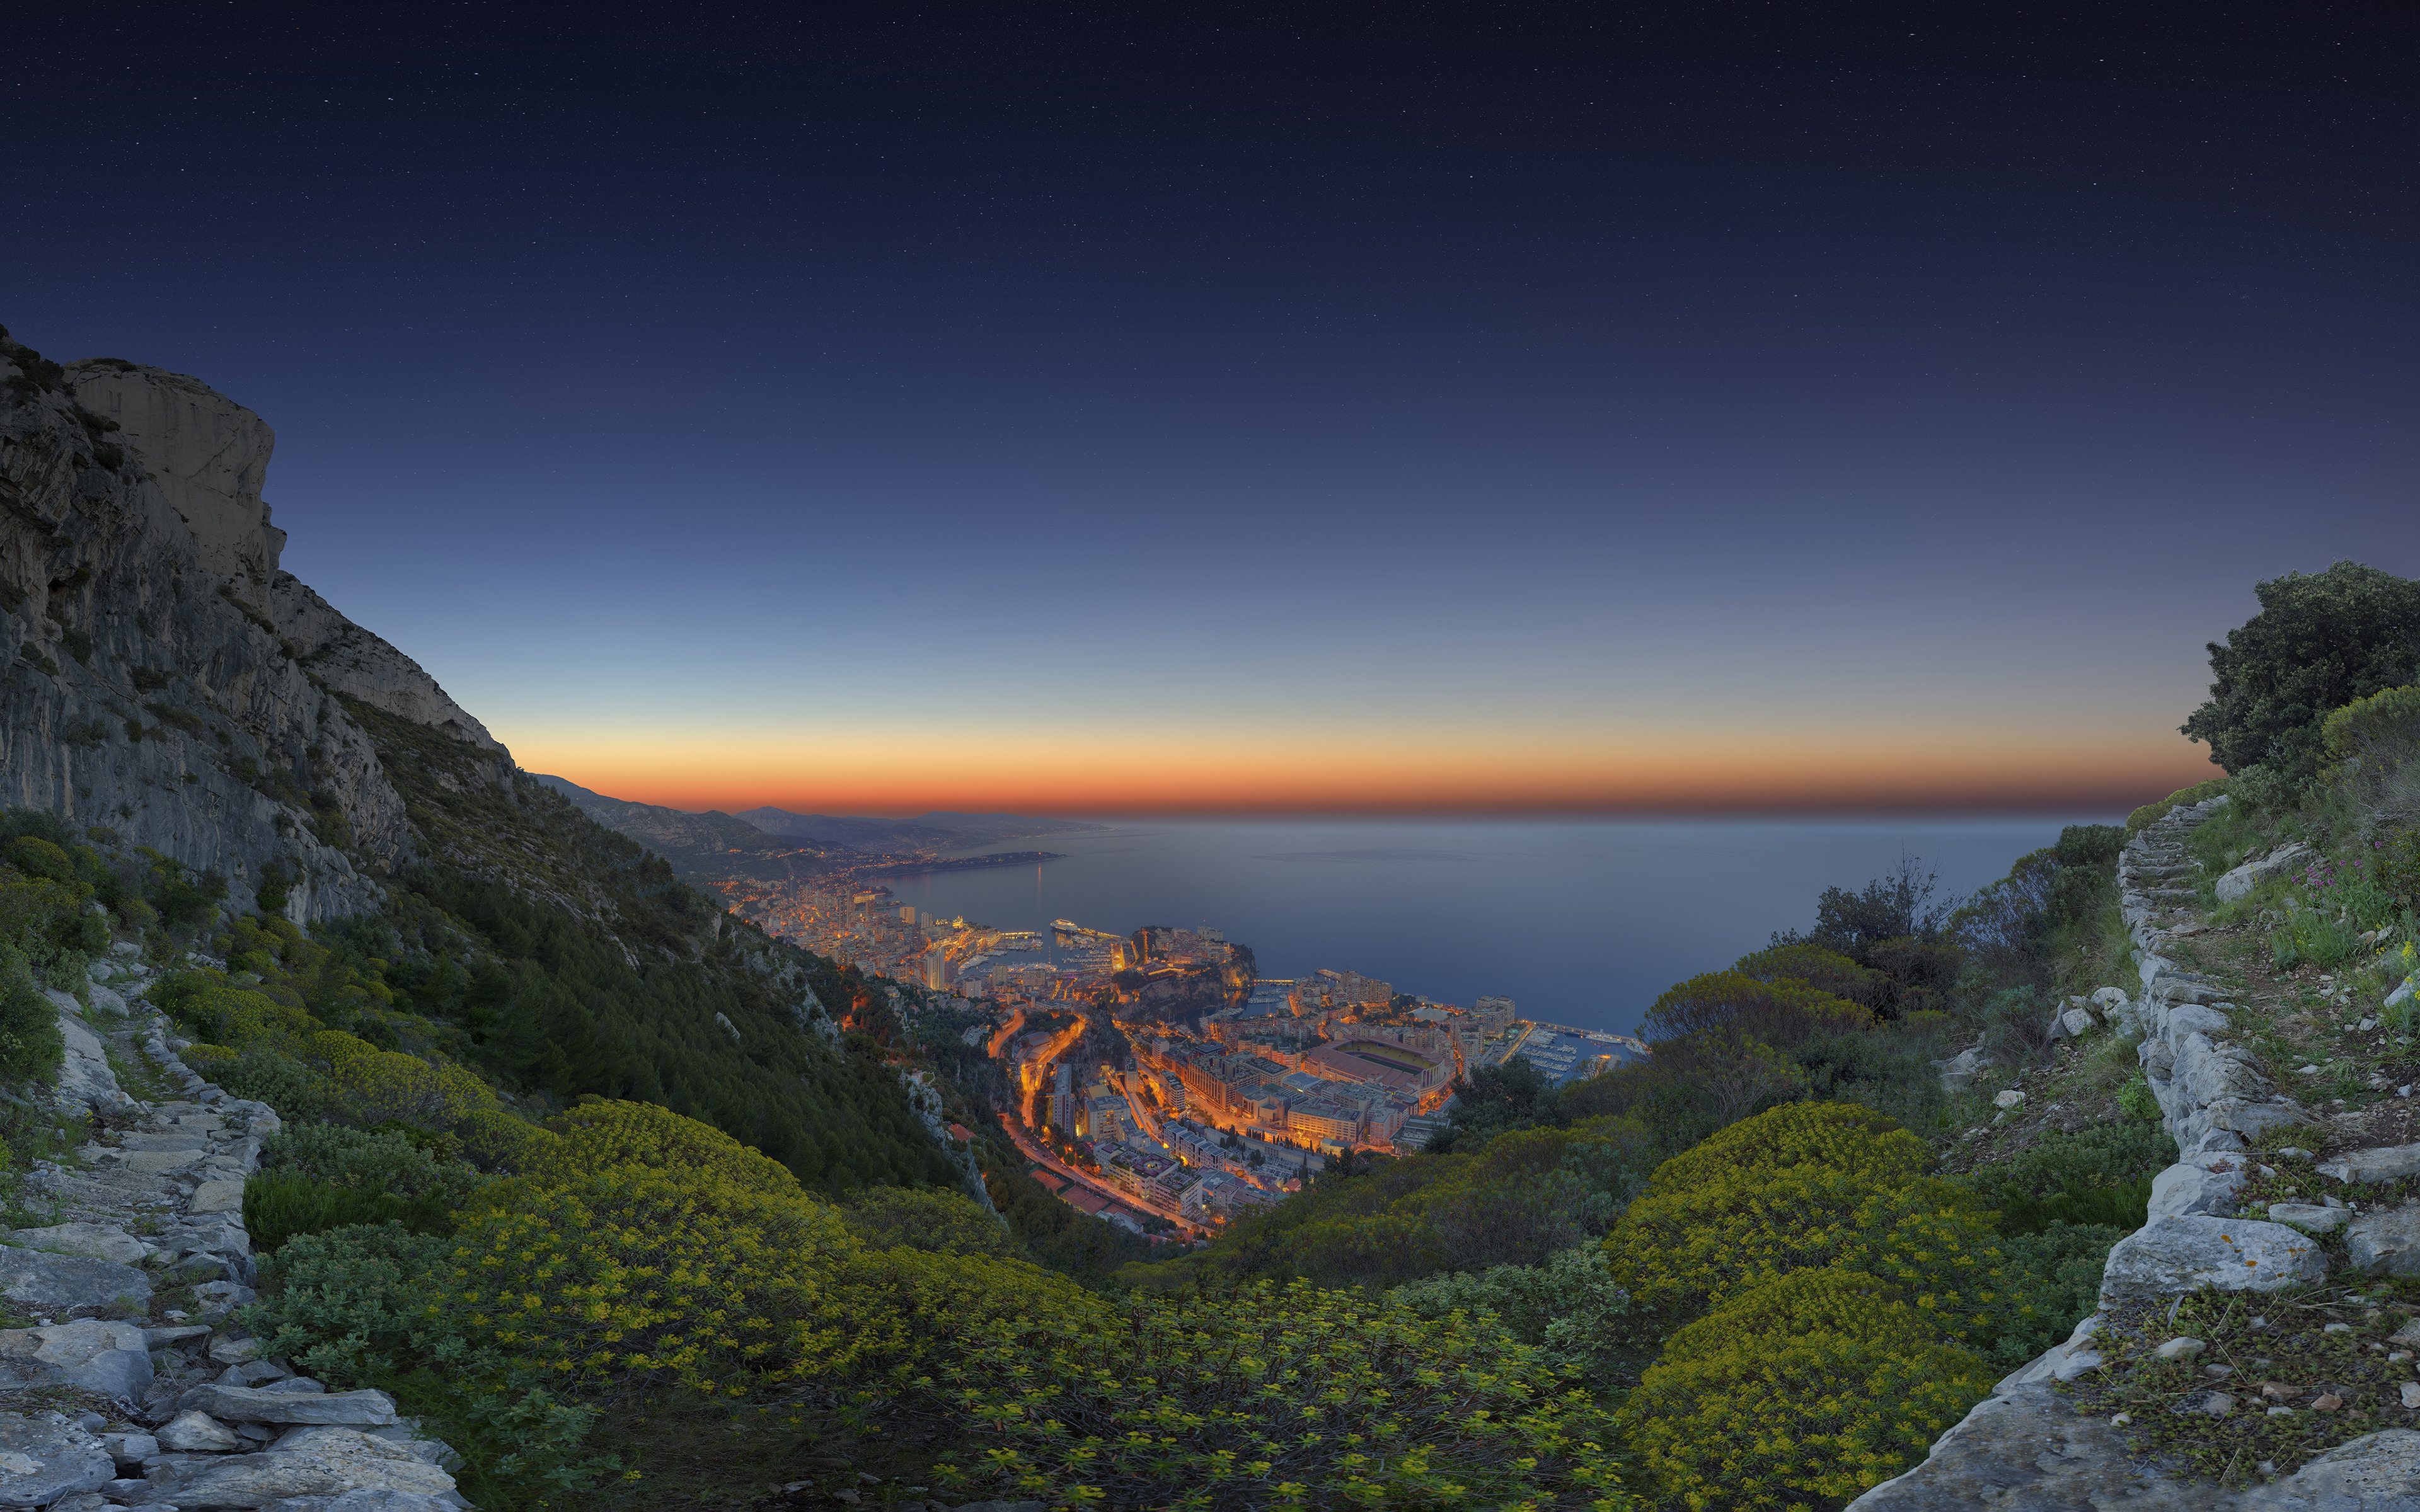 The city of Monaco located on the coast of the sea